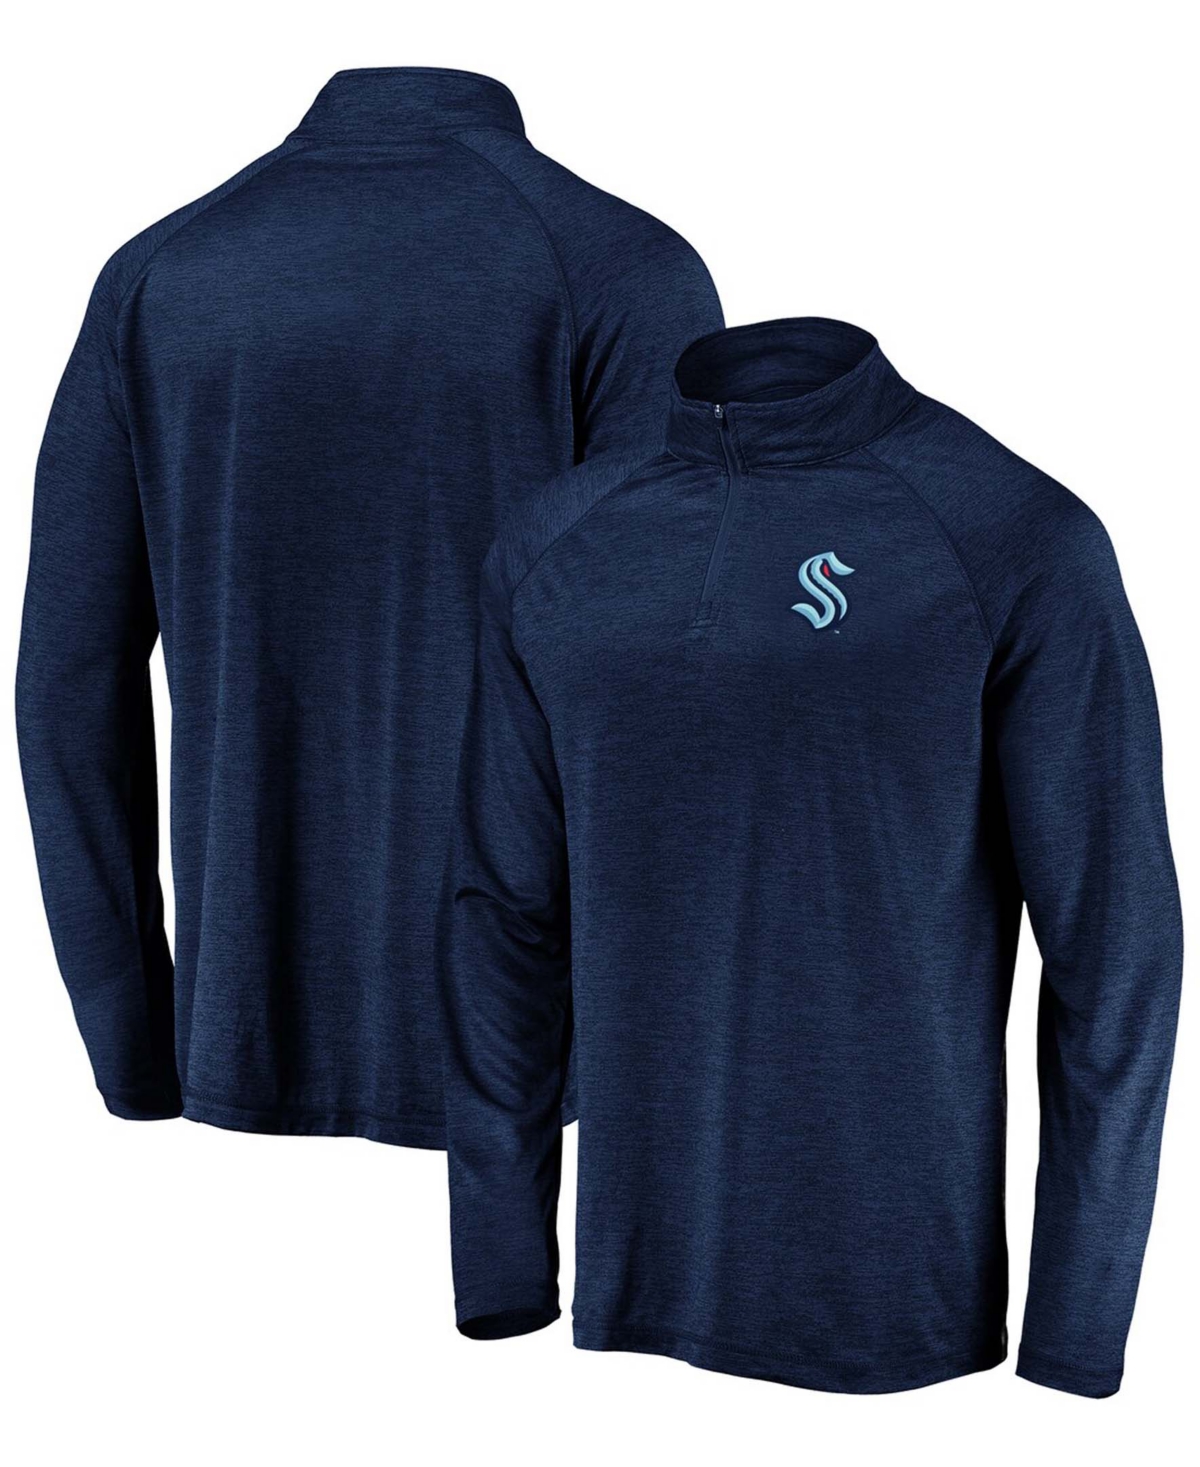 Shop Authentic Nhl Apparel Fanatics Branded Men's Navy Seattle Kraken Primary Logo Quarter-zip Pullover Fleece Jacket